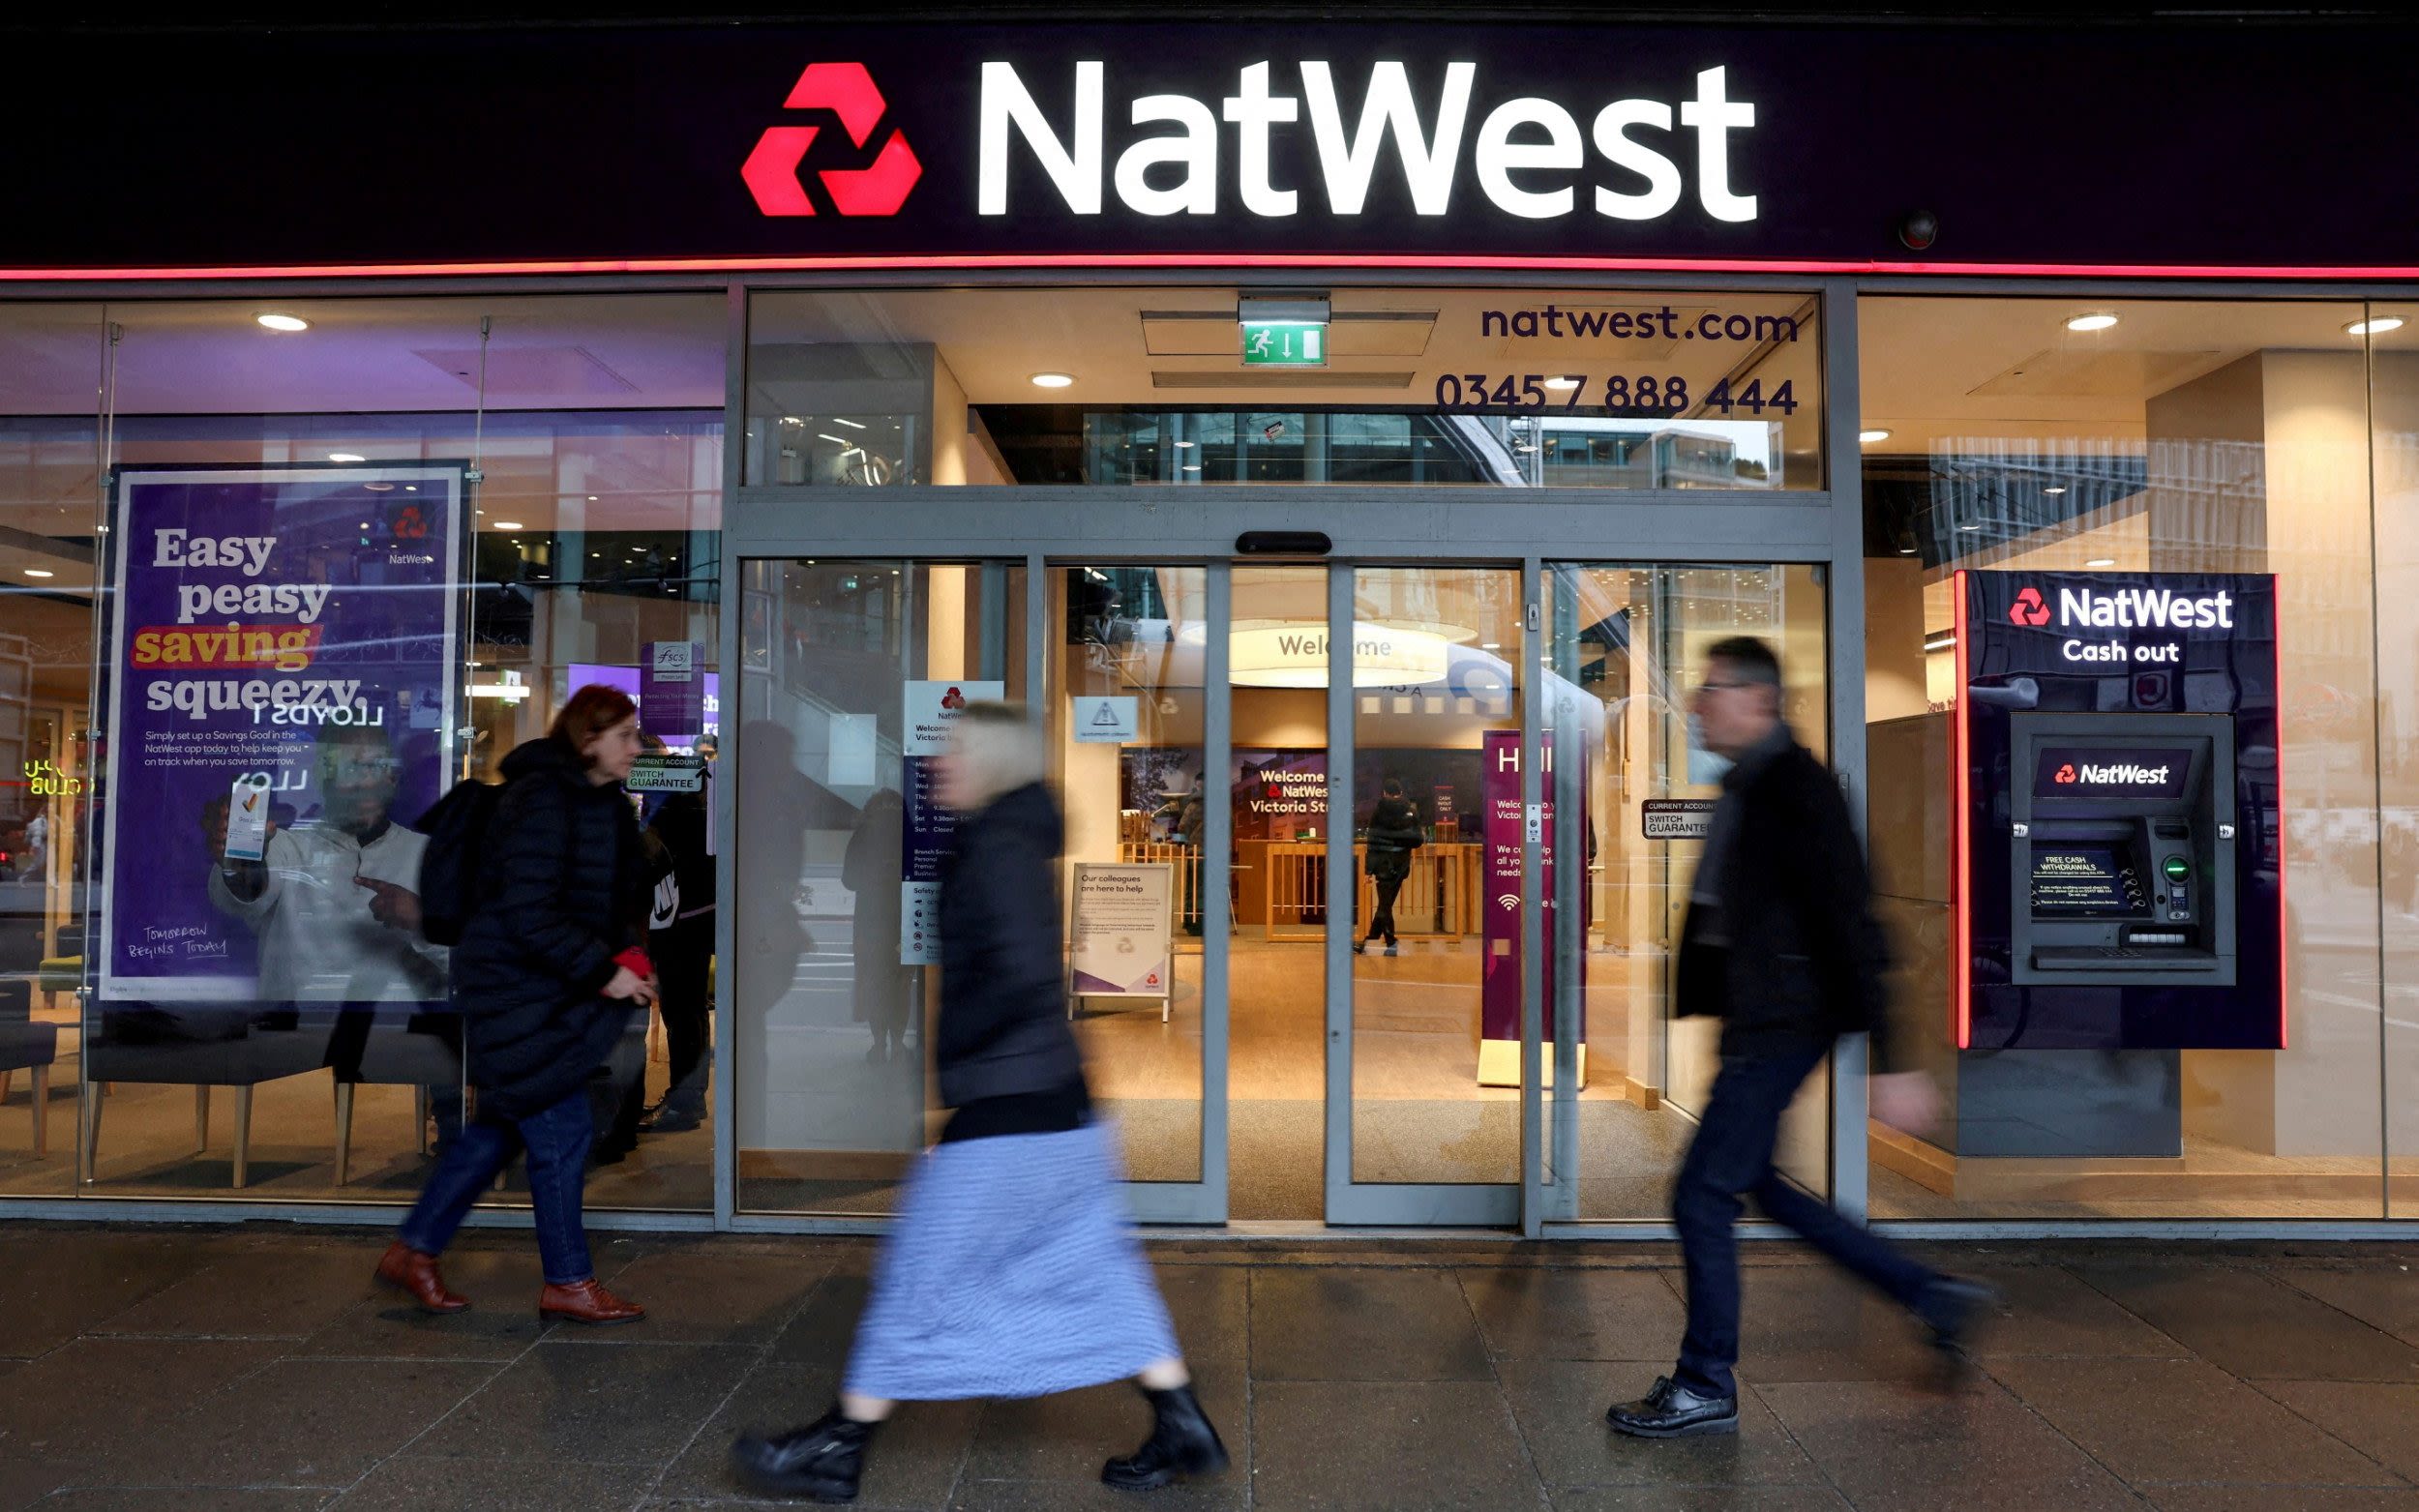 NatWest share sale abandoned as election campaign derails plans